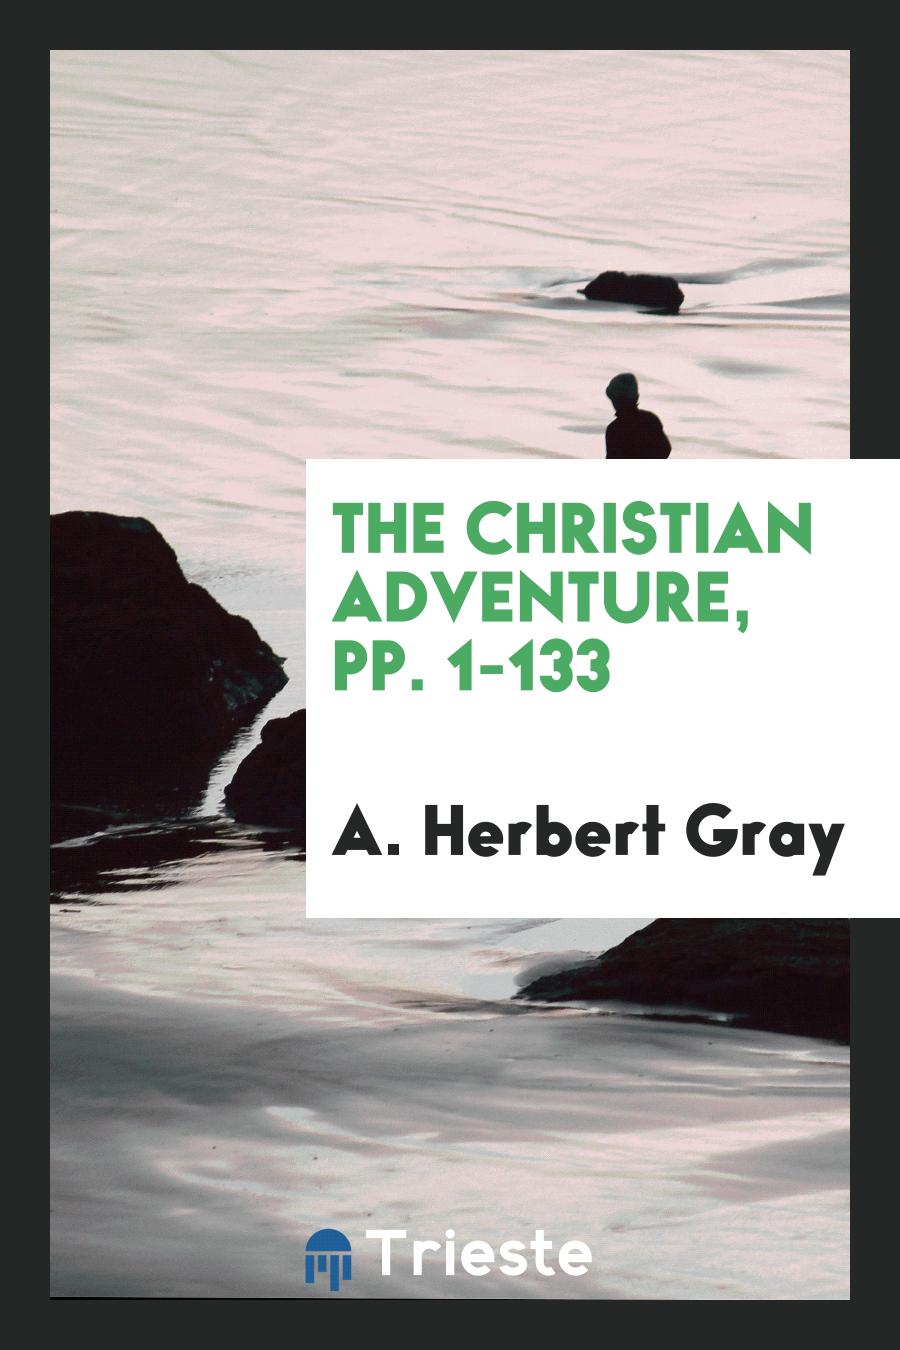 The Christian Adventure, pp. 1-133